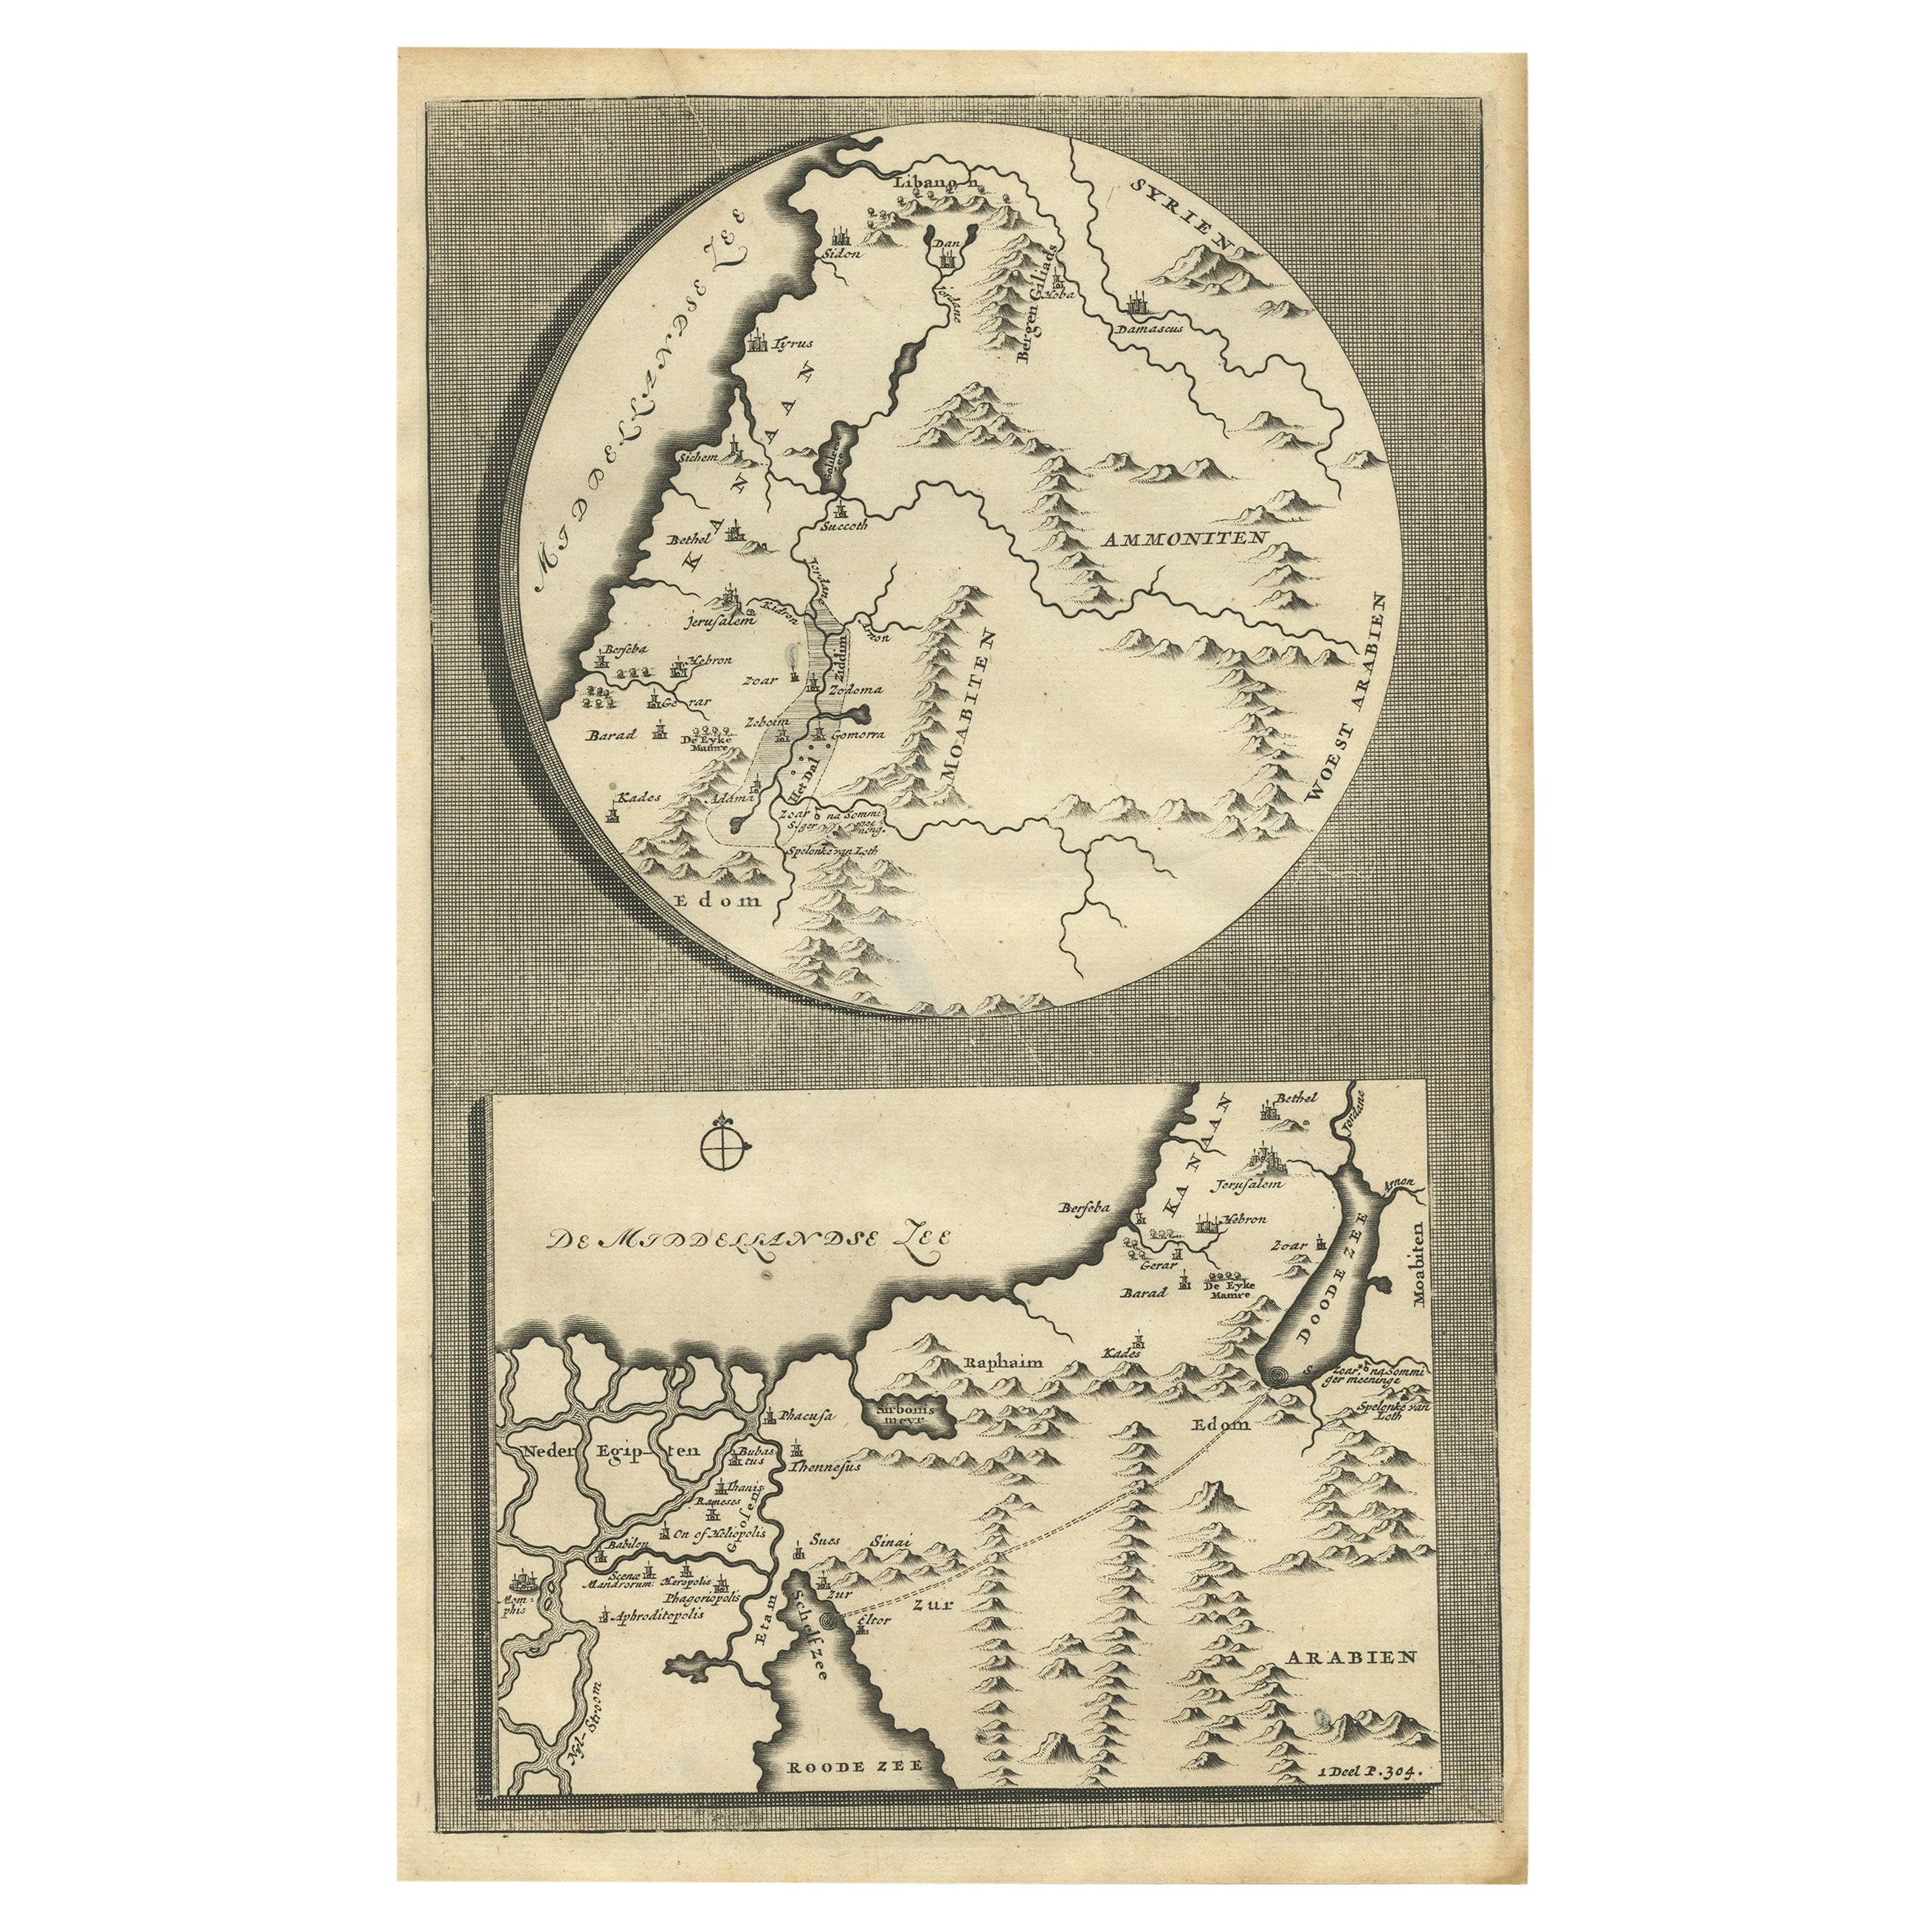 Rare carte ancienne du Moyen-Orient du Moyen-Orient, vers 1690